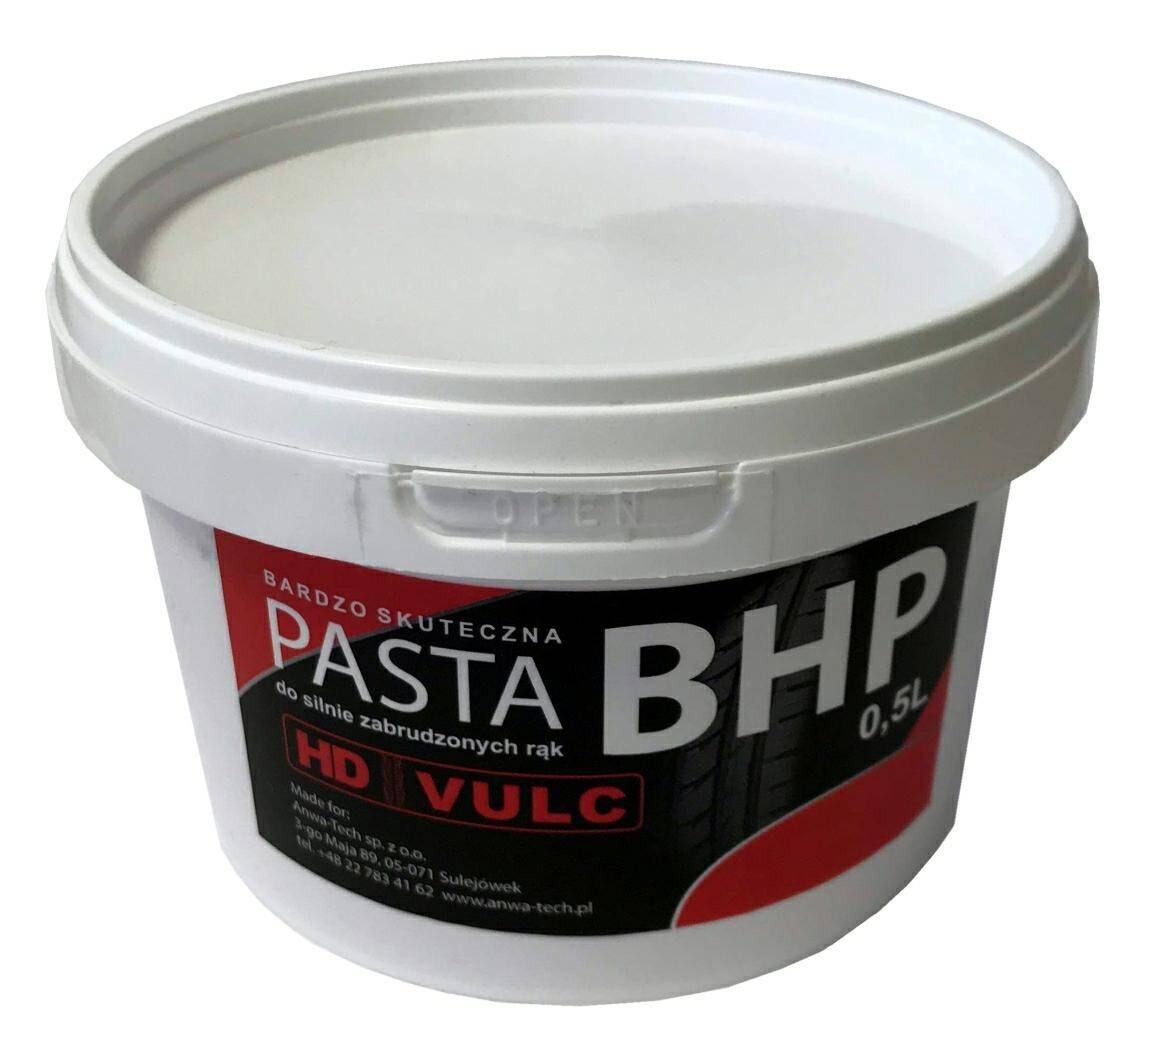 BHP HD VULC paste pink 0.5L